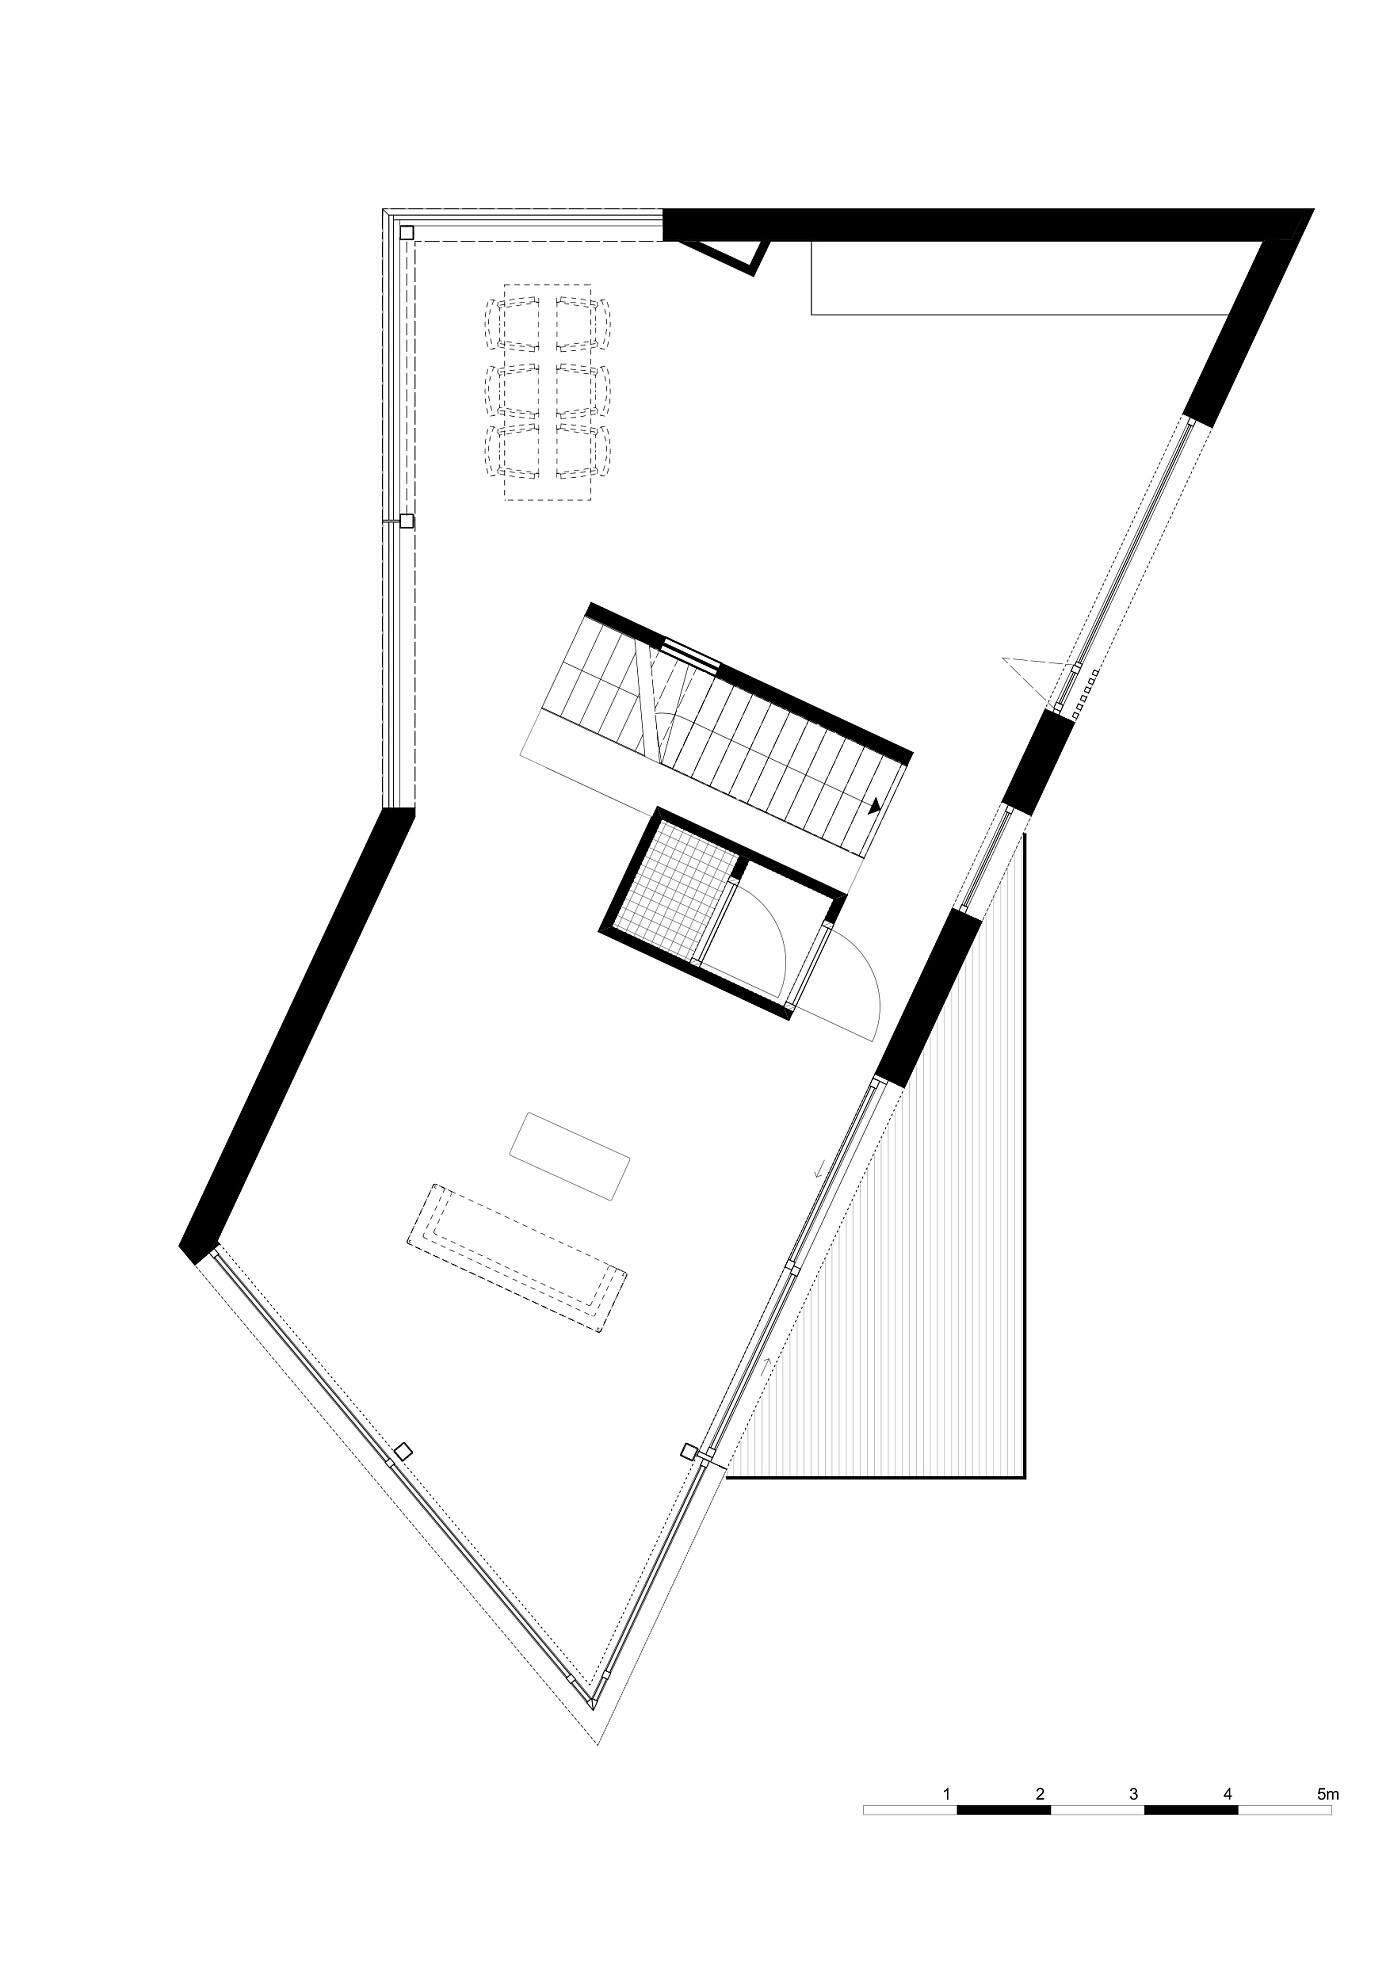 House MG by Stats Architecten